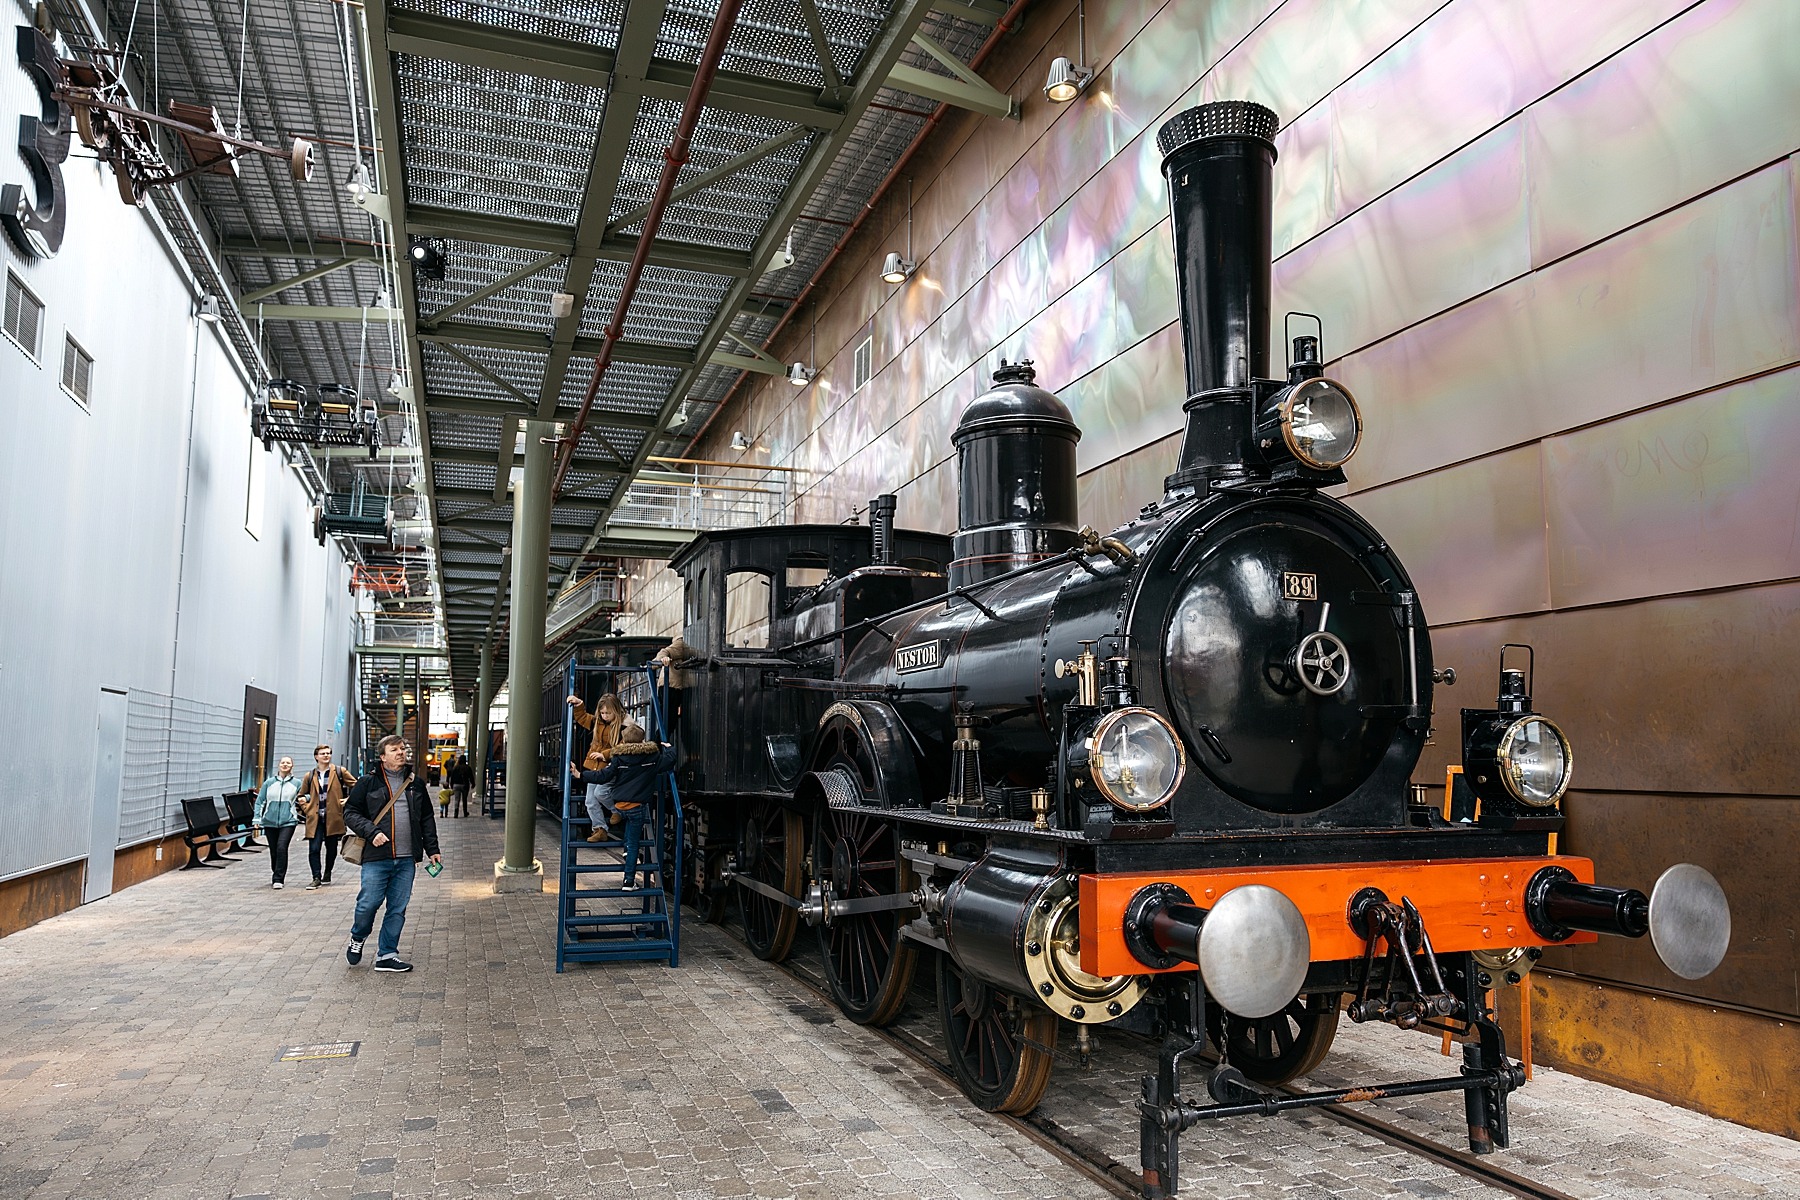 Spoorwegmuseum, l'incroyable musée du train de Utrecht 71